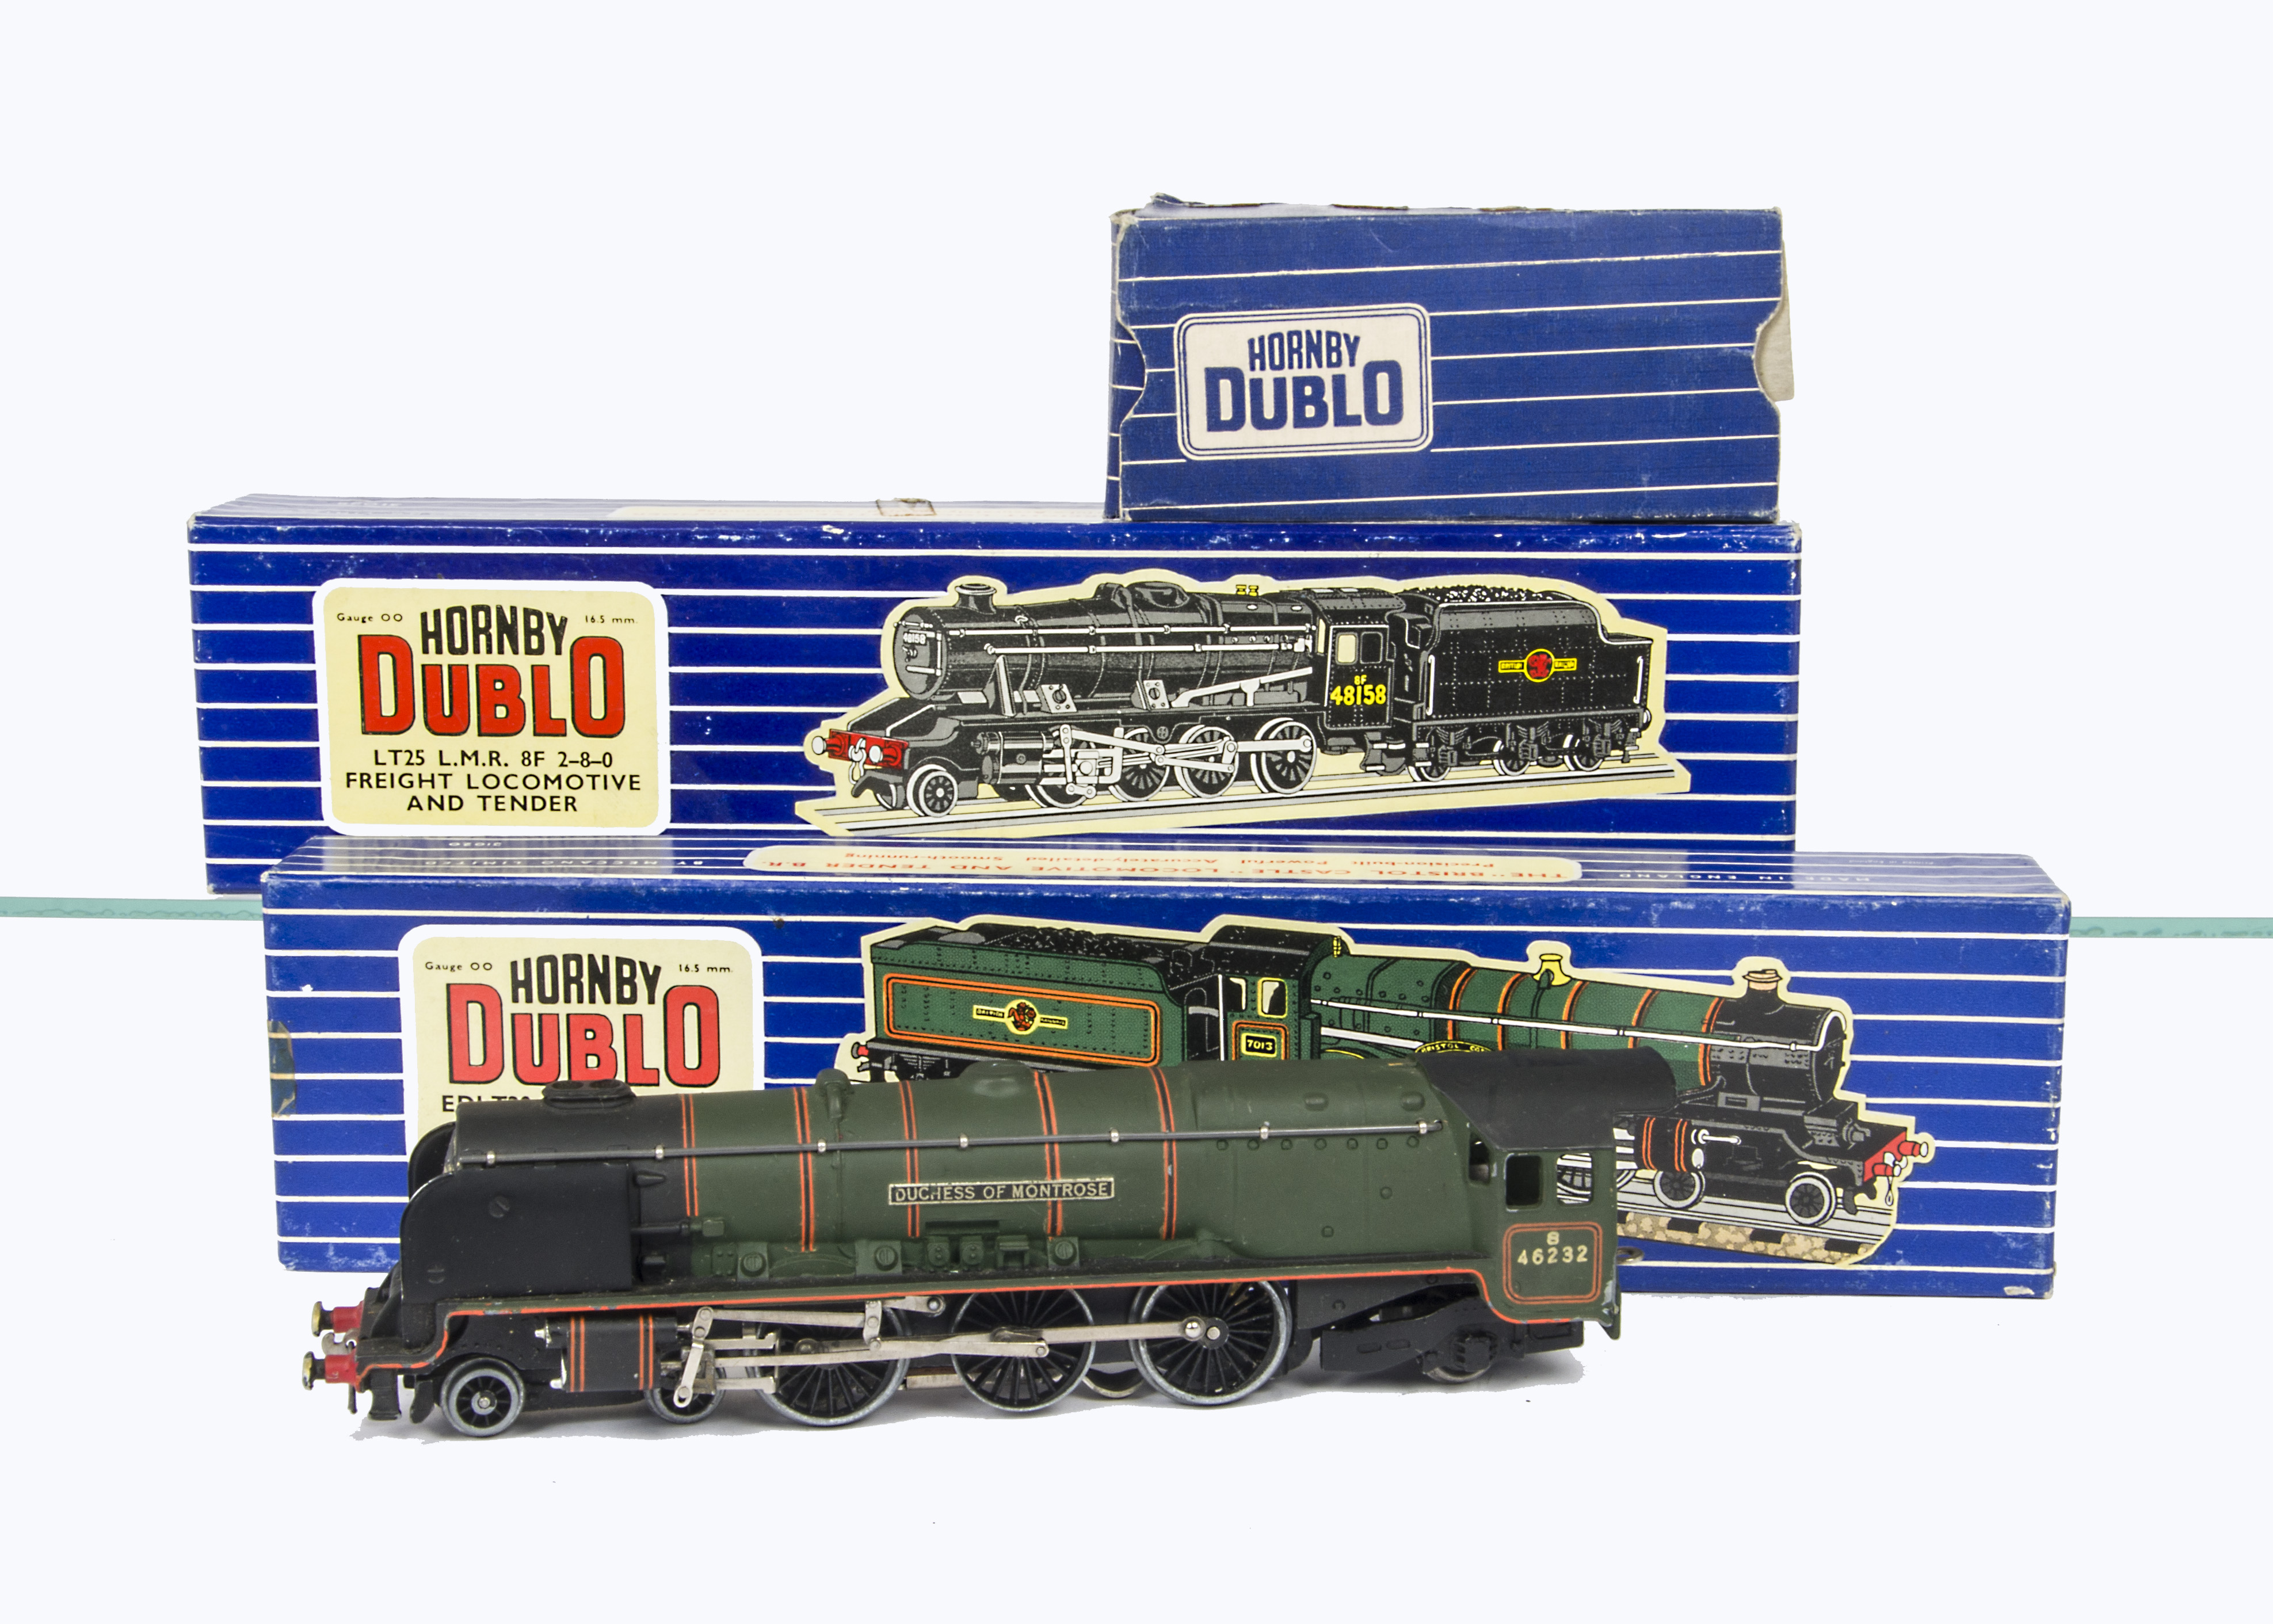 Hornby Dublo 00 Gauge 3-Rail Steam Locomotives and Tenders, LT25 LMR 8F 2-80 48158, EDLT20 '